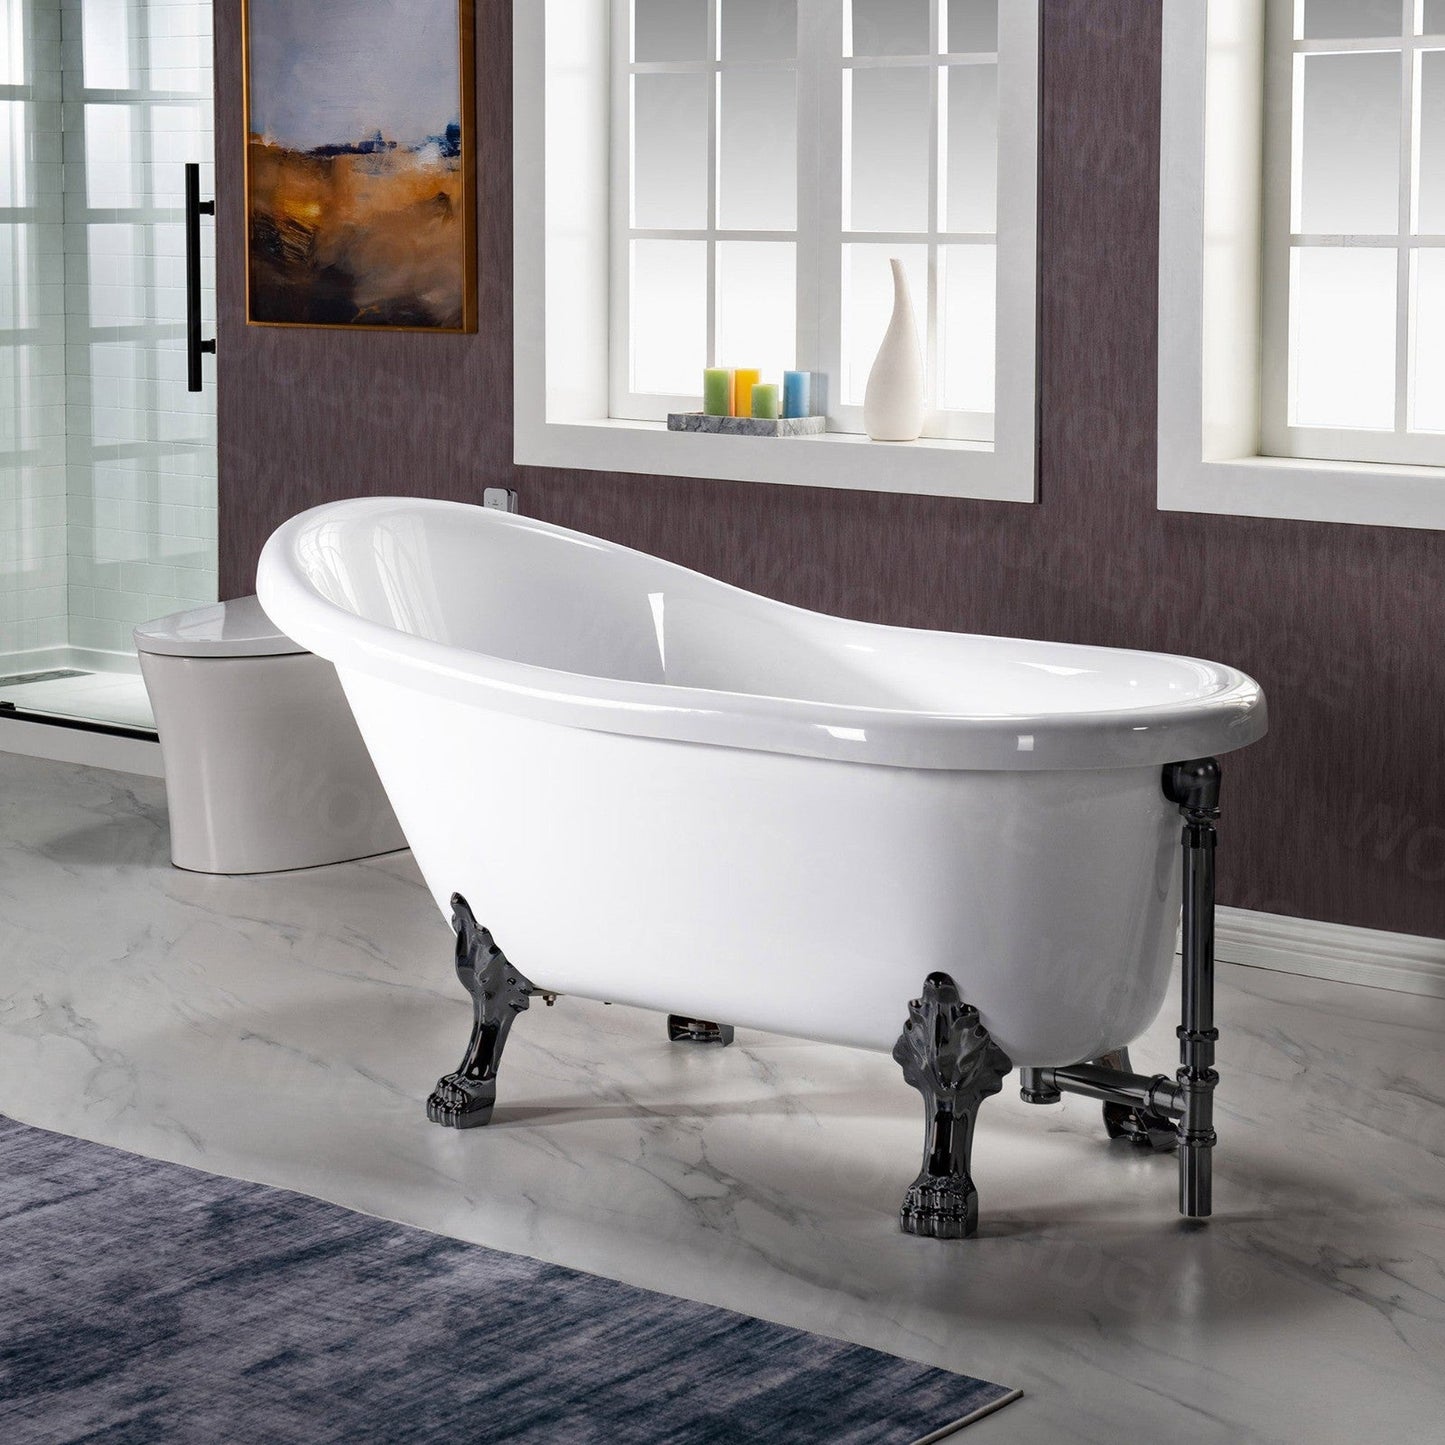 WoodBridge 59" White Acrylic Slipper Clawfoot Bath Tub With Matte Black Feet, Drain, Overflow, F0072MBVT Tub Filler and Caddy Tray